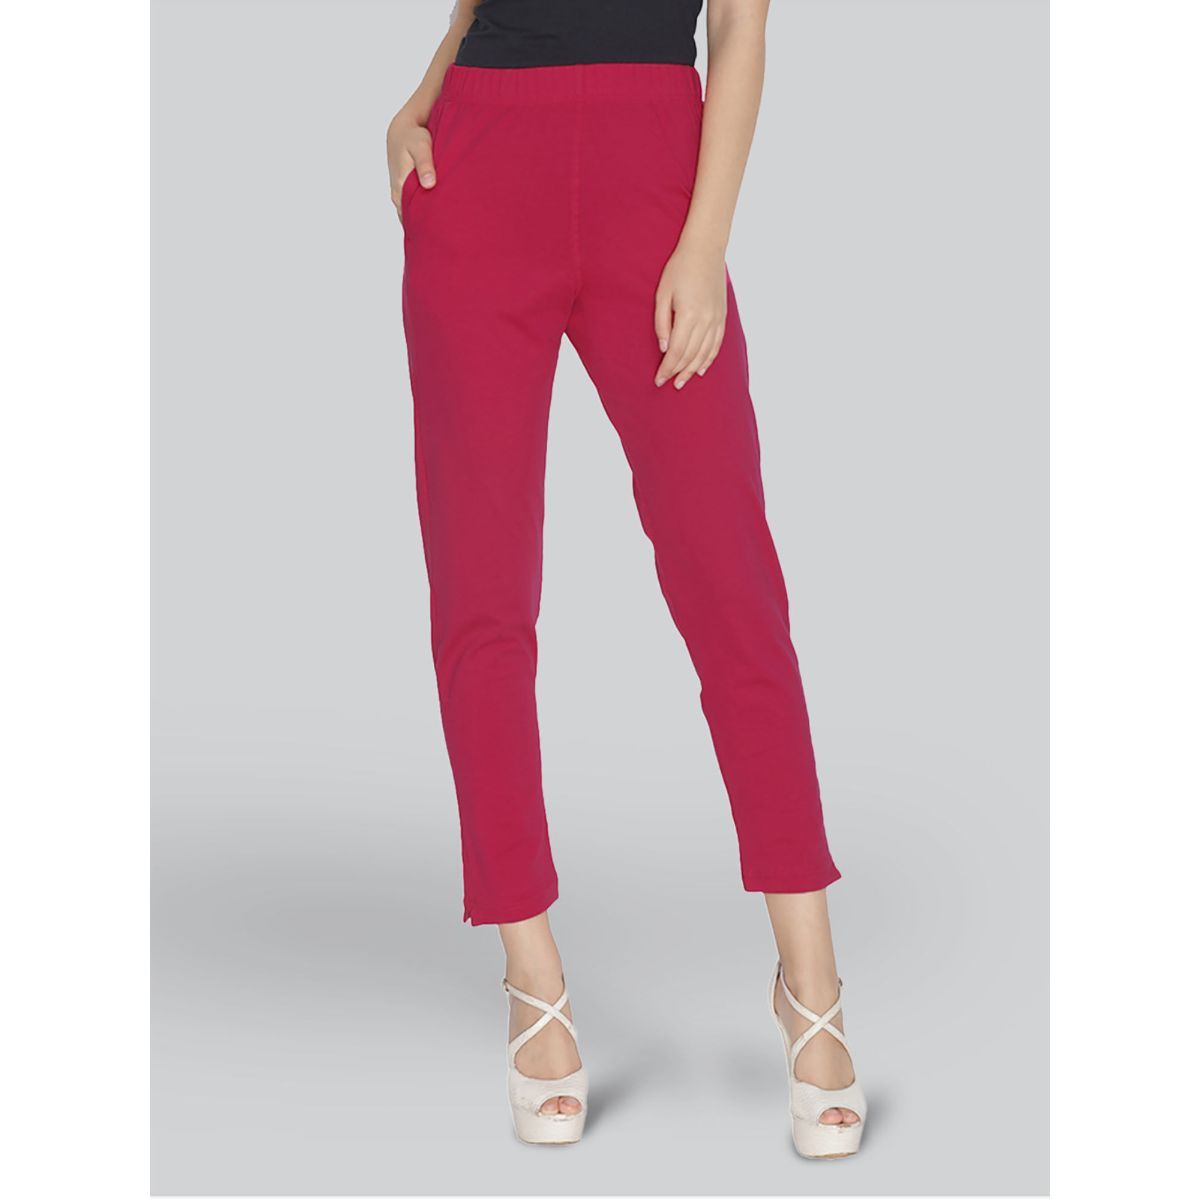 Pink Ikat Cotton Pants Online for Women  Ladies Pants by Darzaania   CraftsandLoomscom